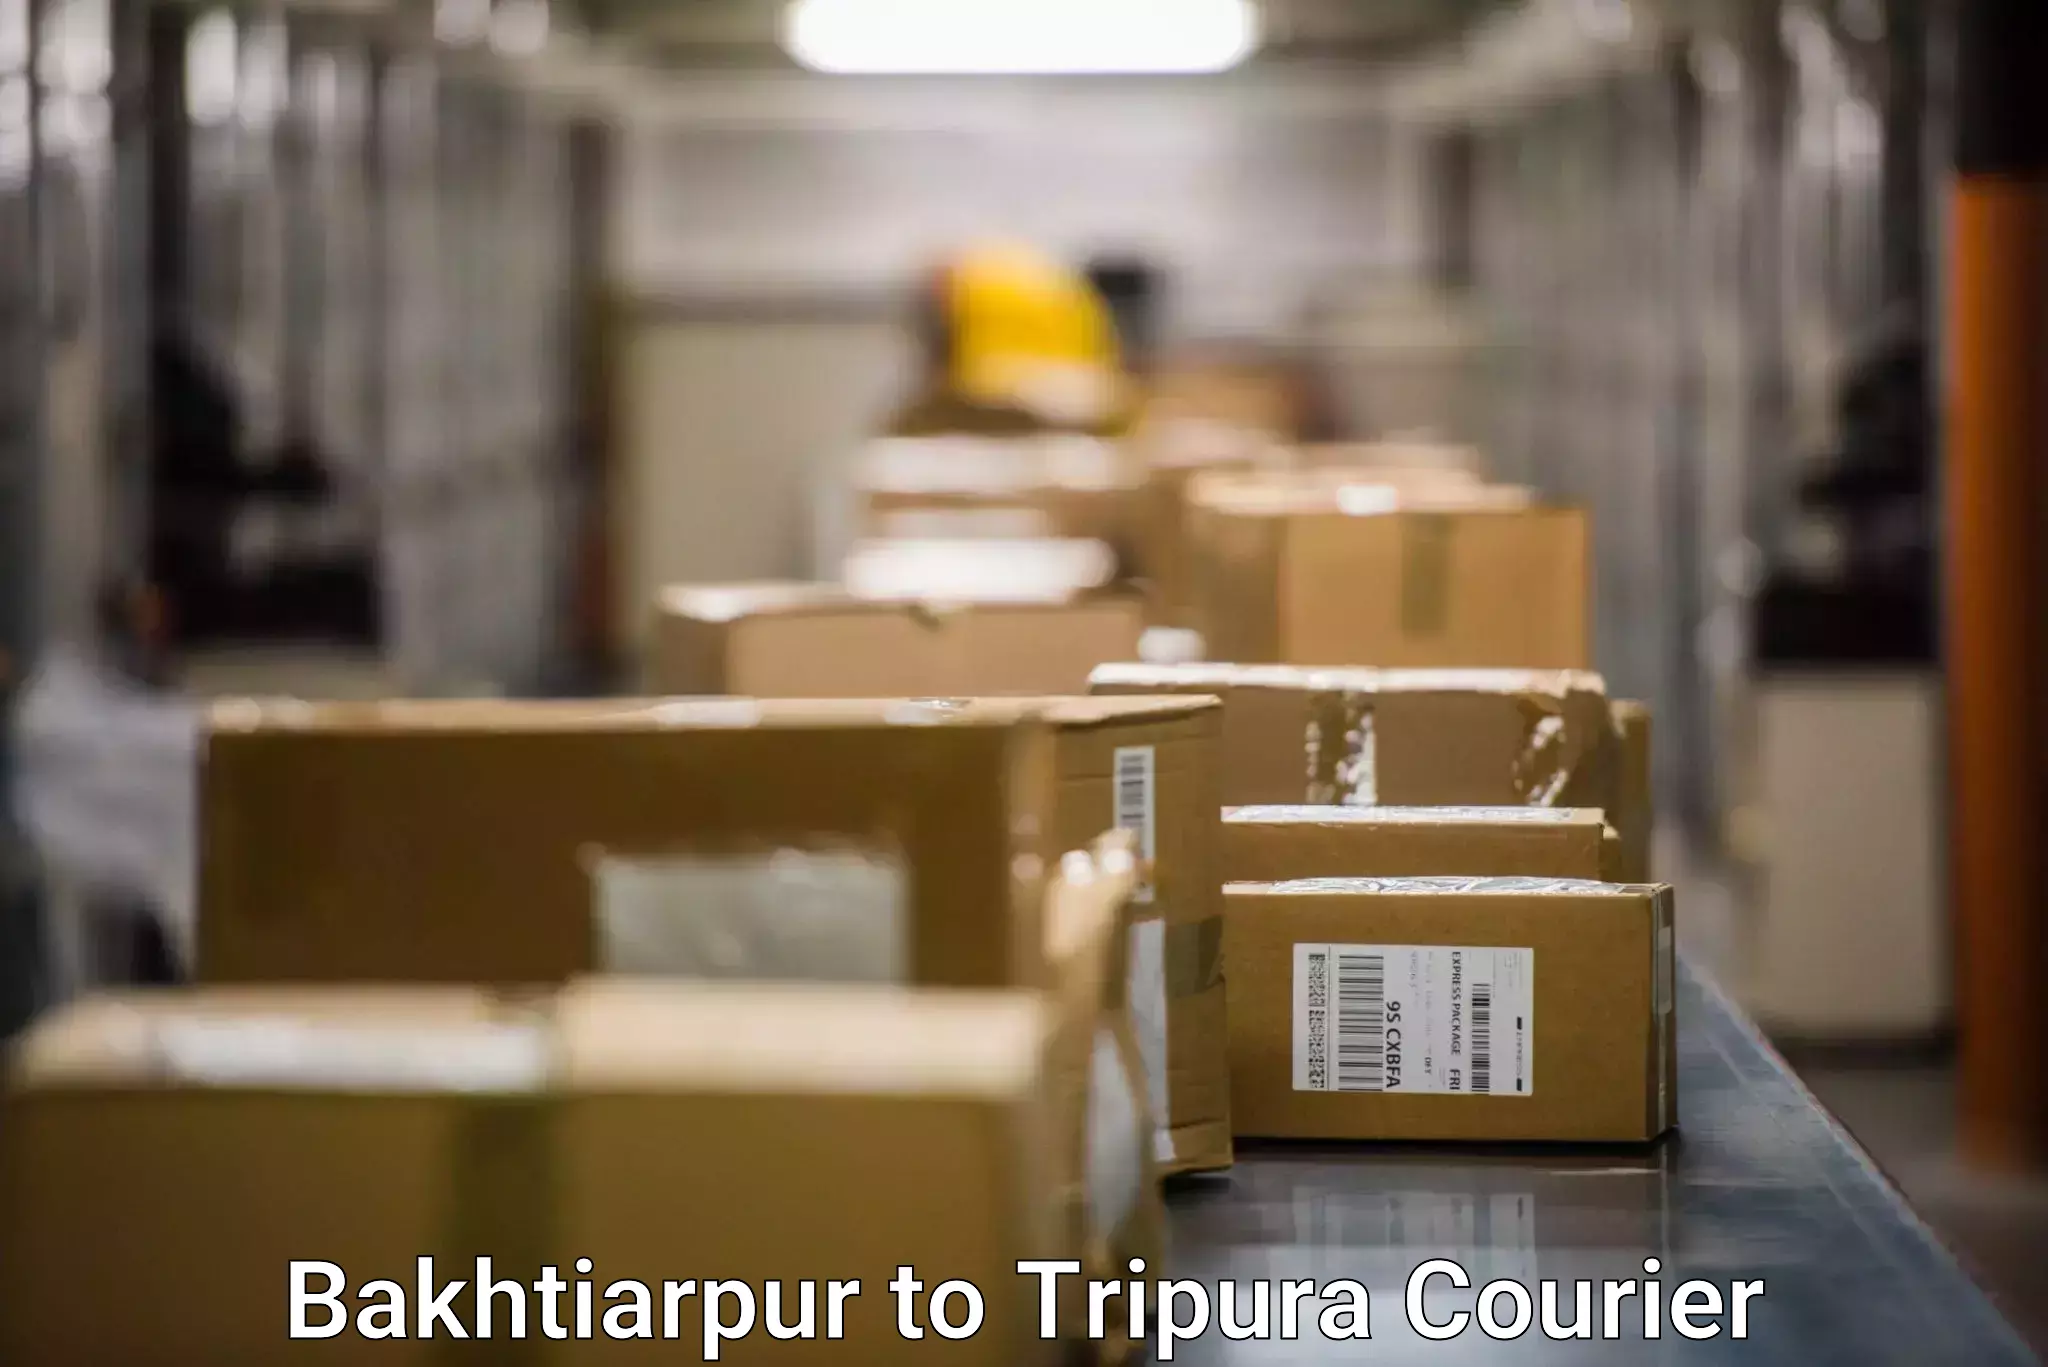 Fast delivery service in Bakhtiarpur to Tripura